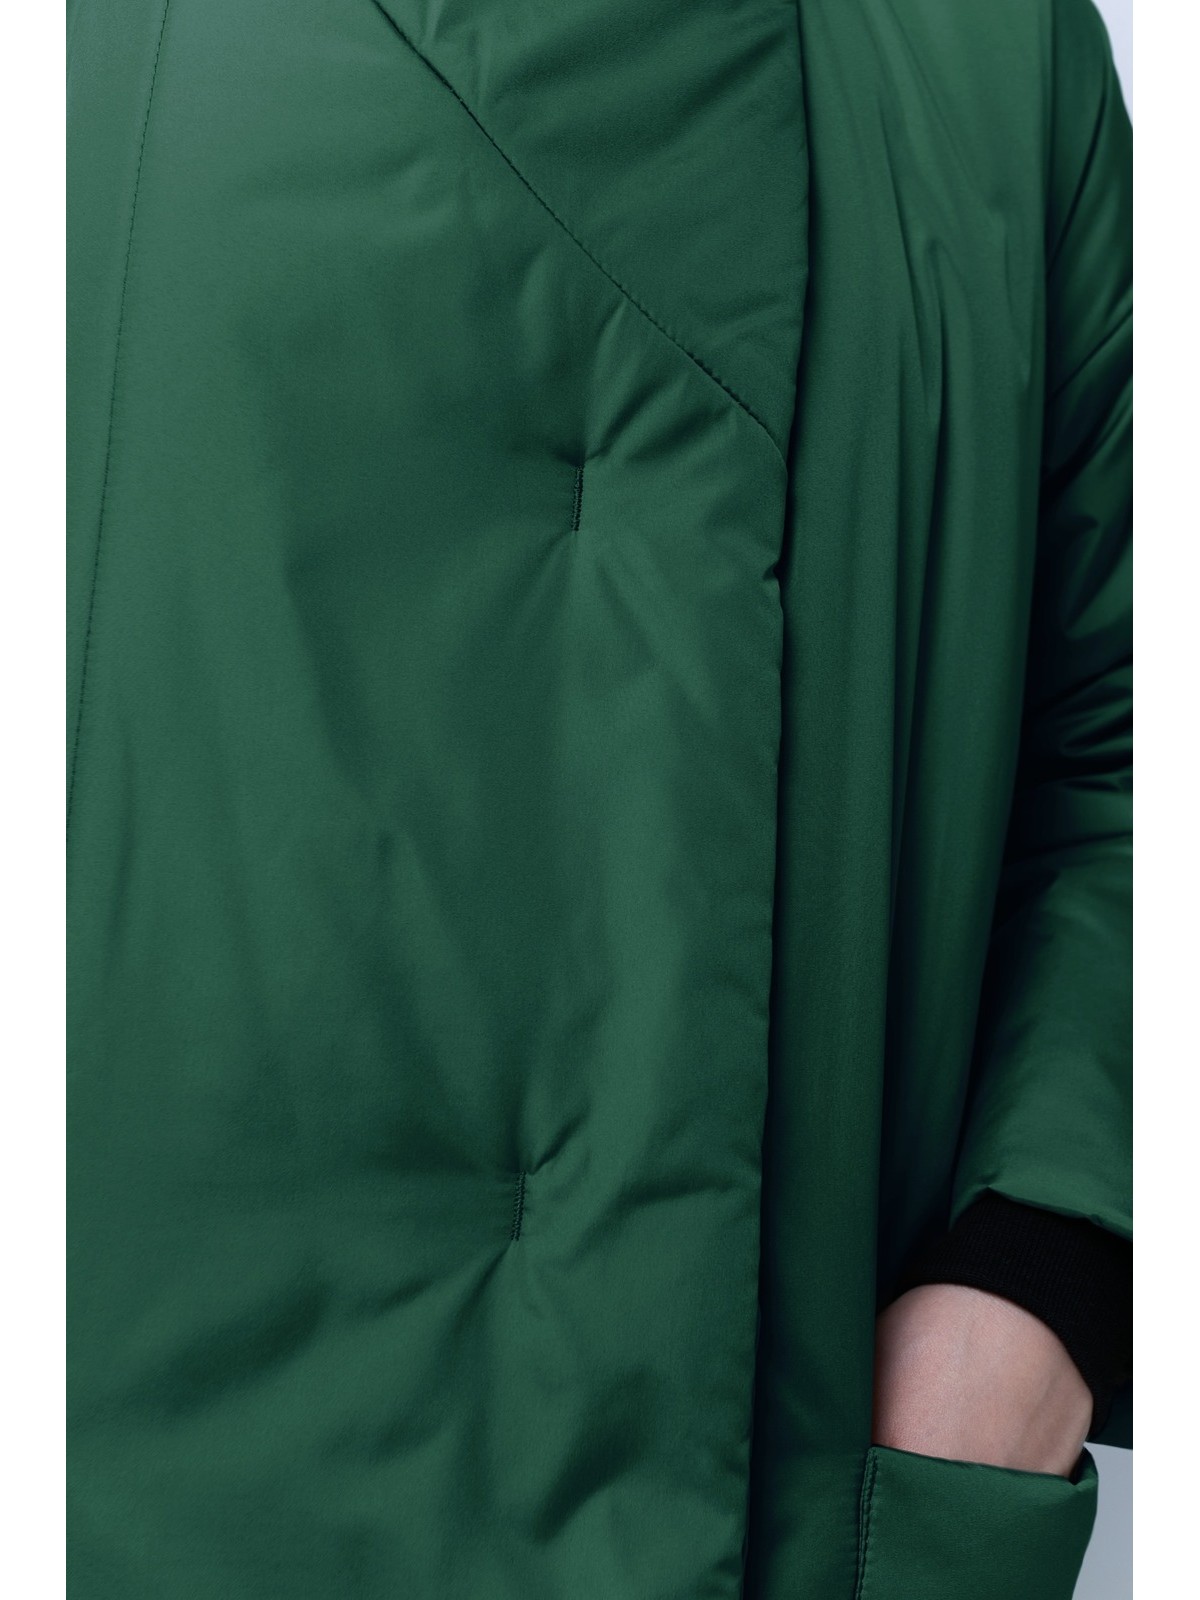 Пуховик-одеяло с английским воротником Grass (Зеленый)